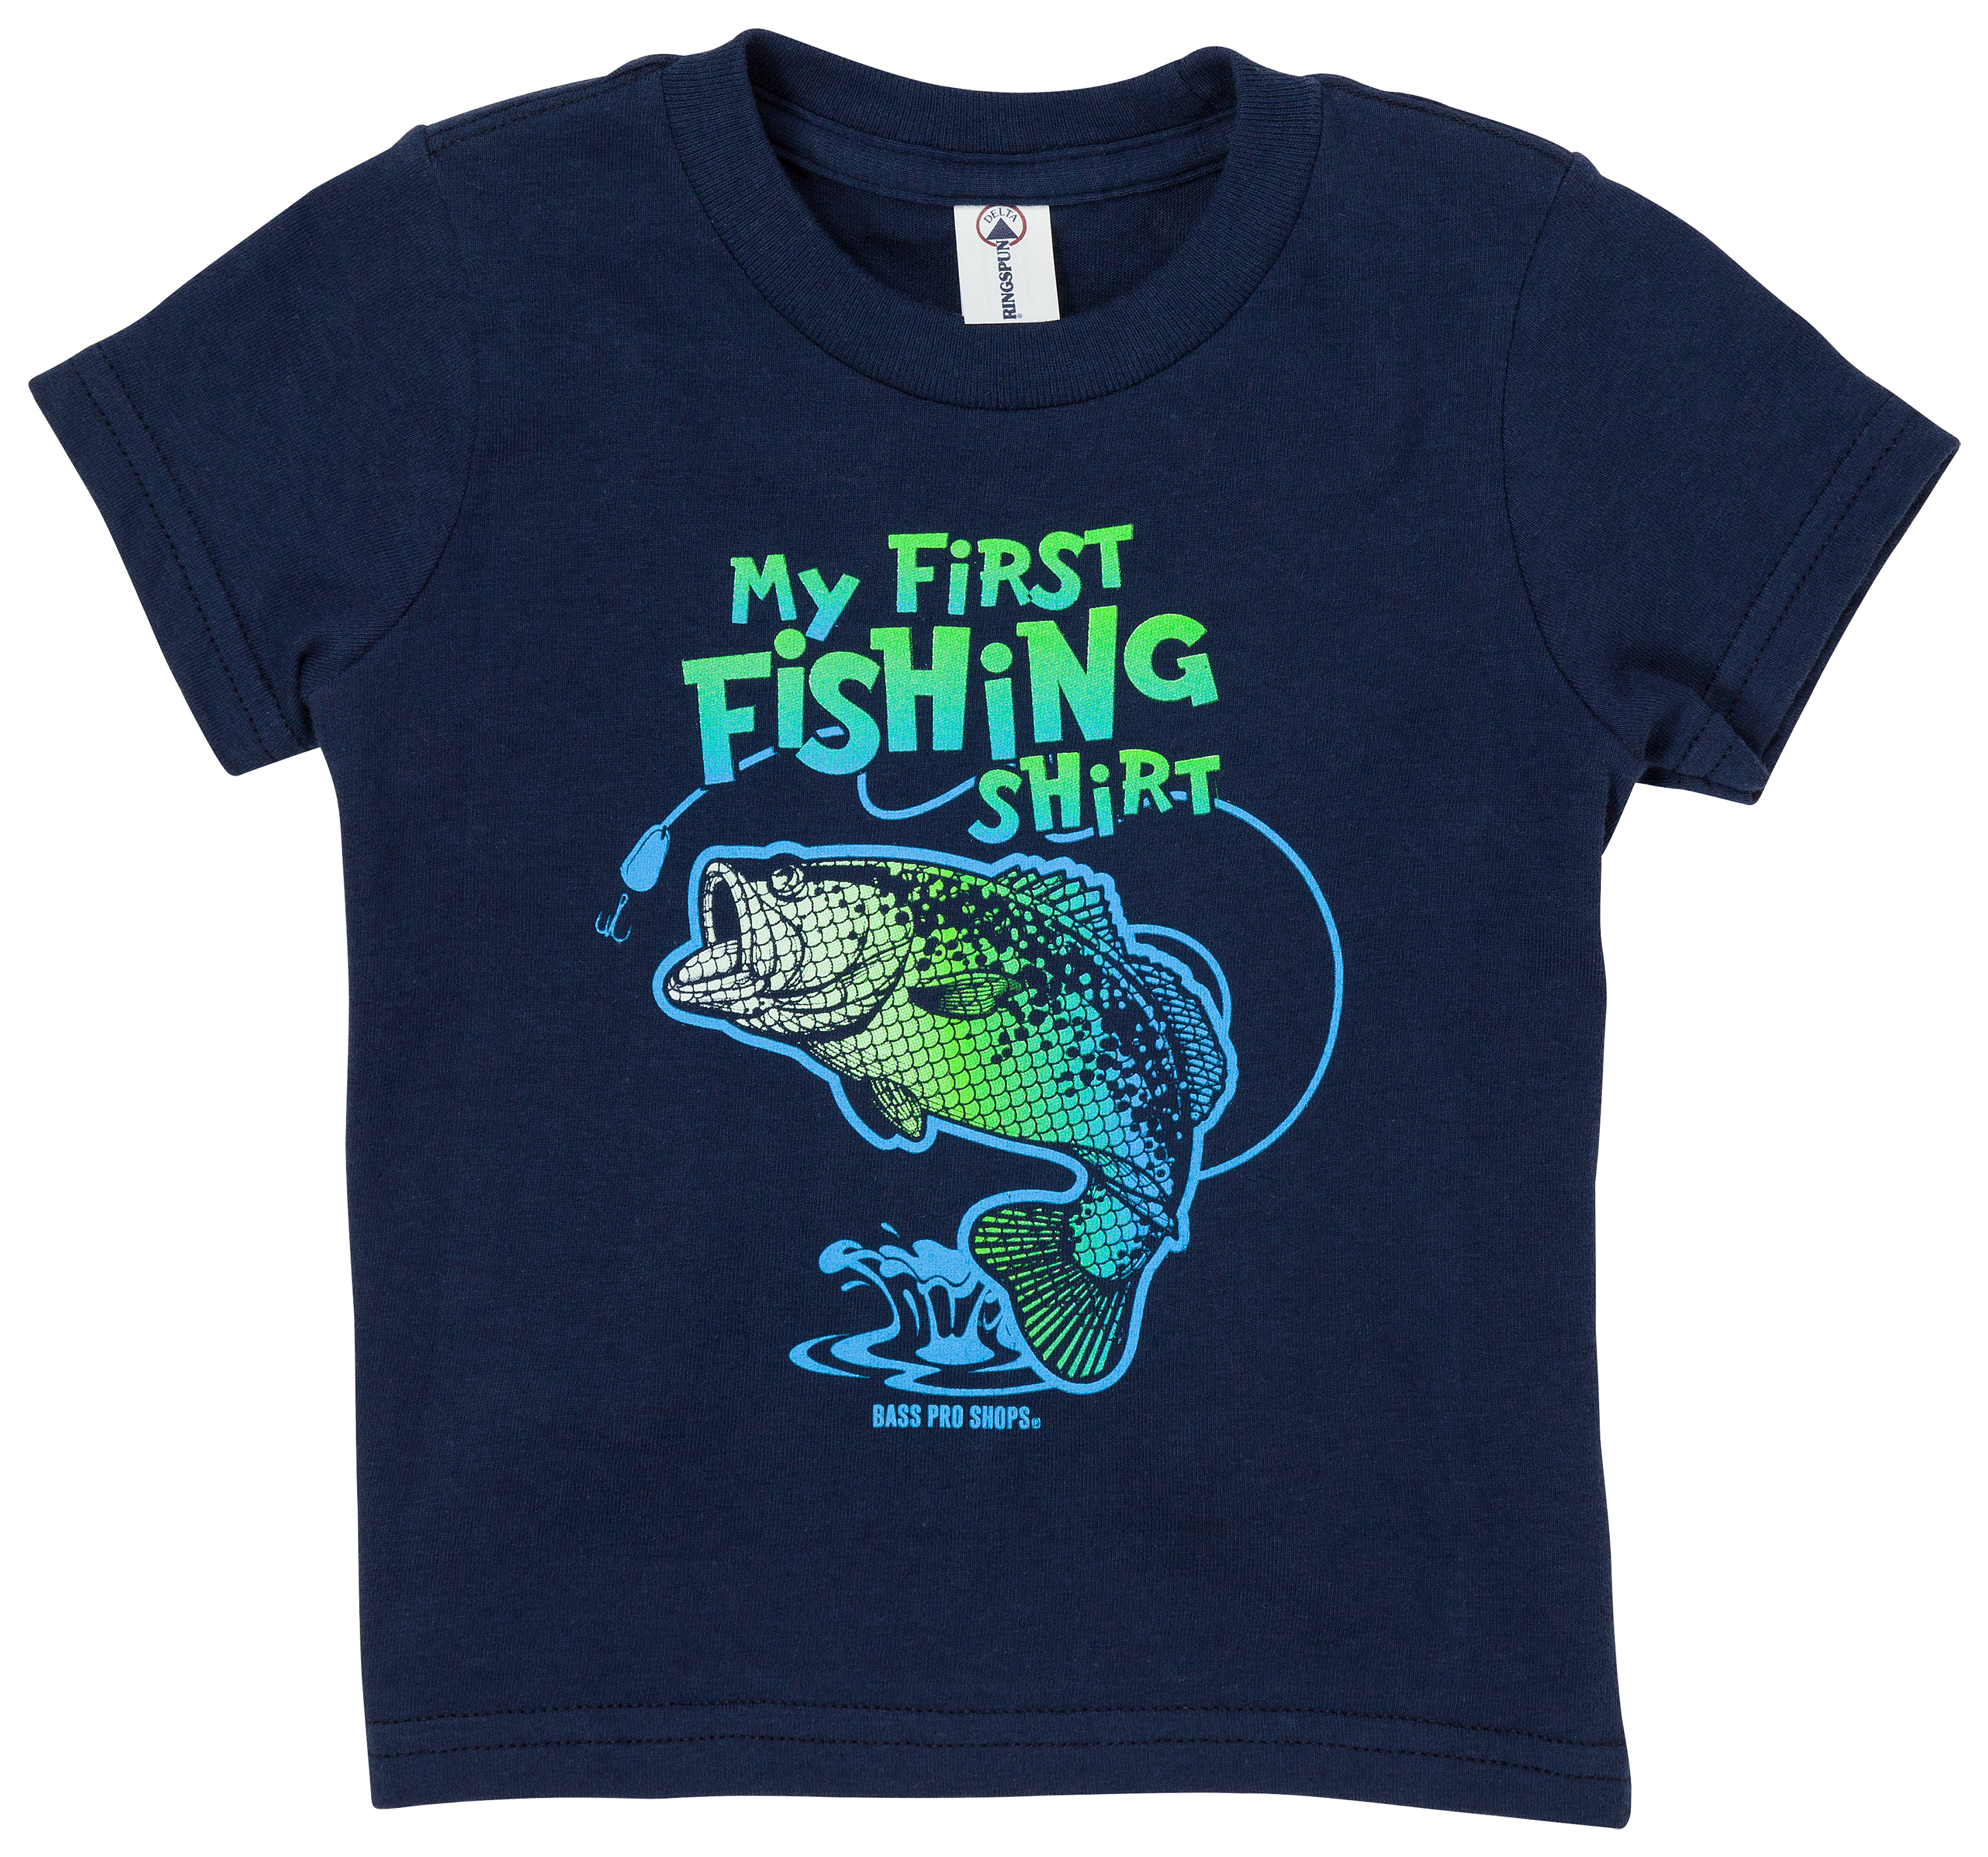 Bass Pro Shops My First Fishing Shirt Short-Sleeve T-Shirt for